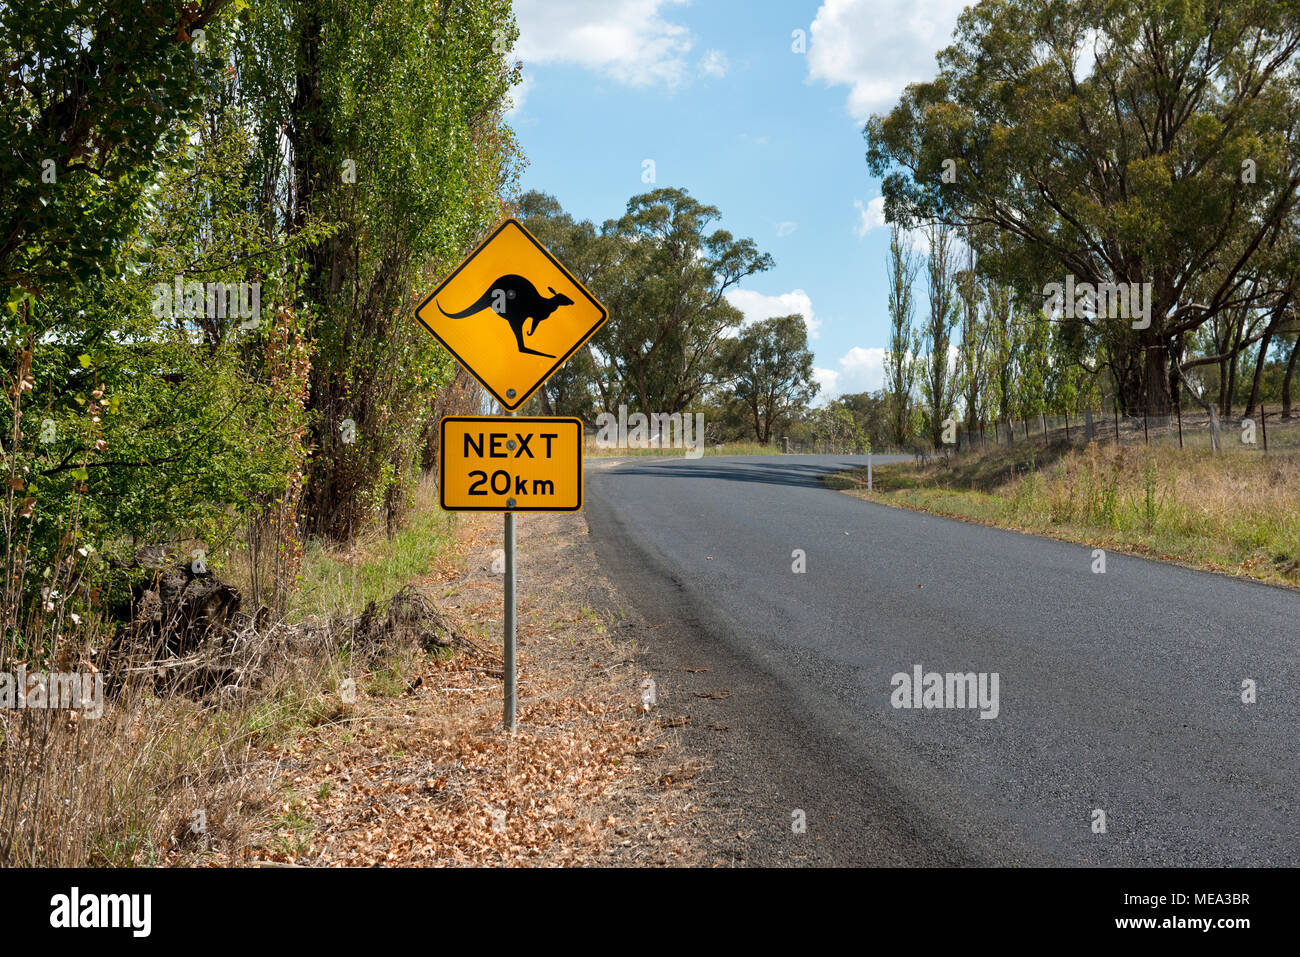 Kangaroo warning sign. New South Wales, Australia Stock Photo